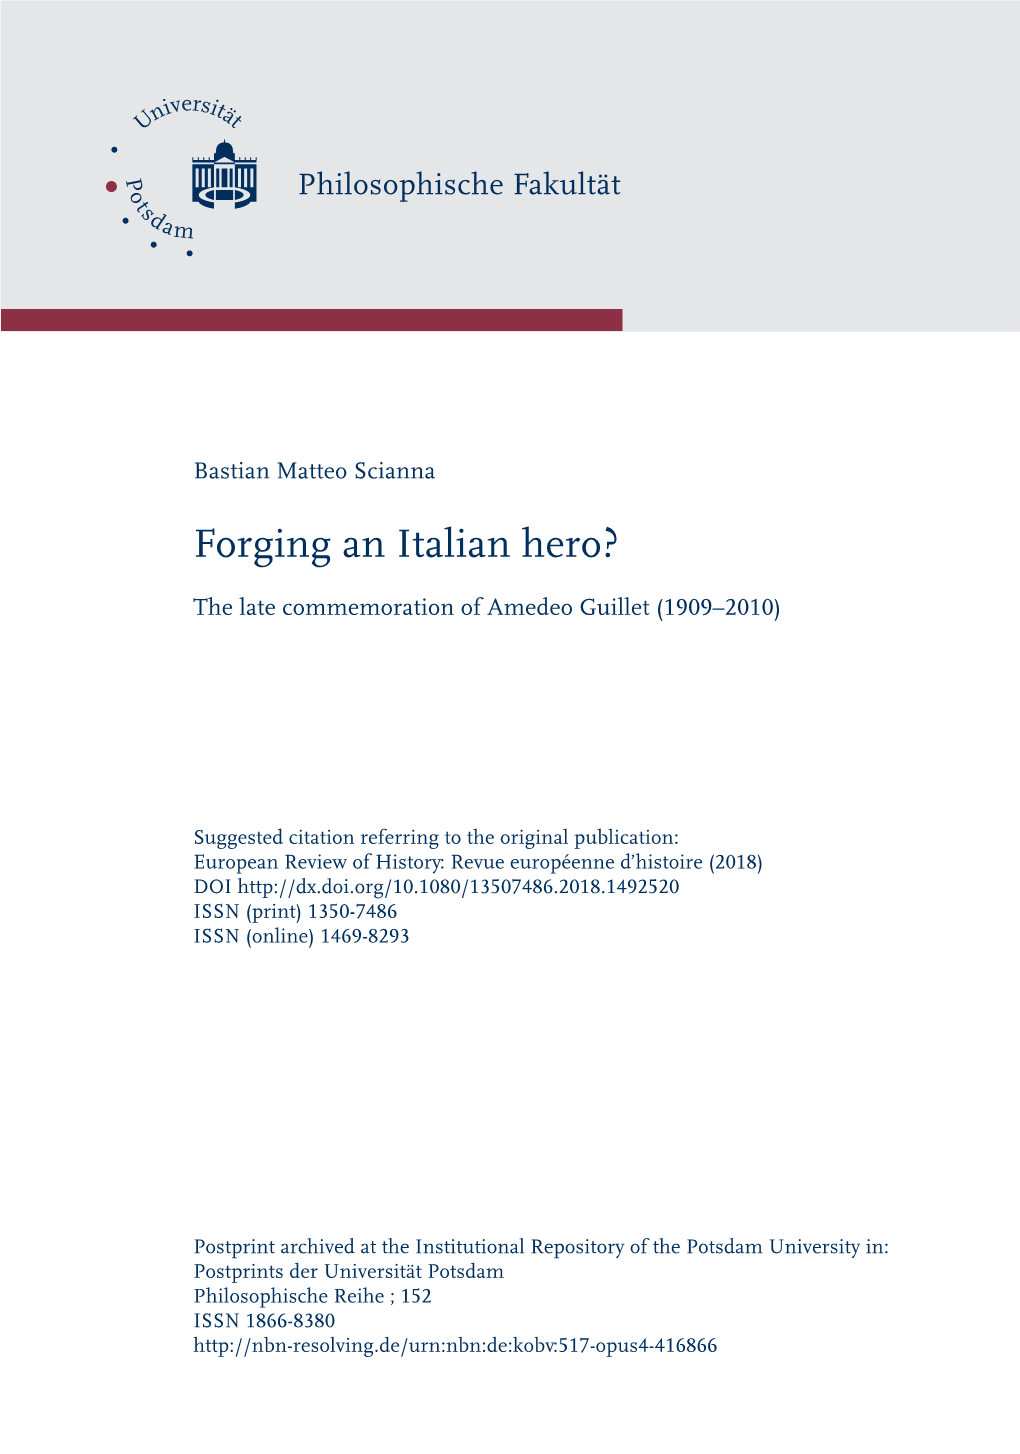 Forging an Italian Hero?